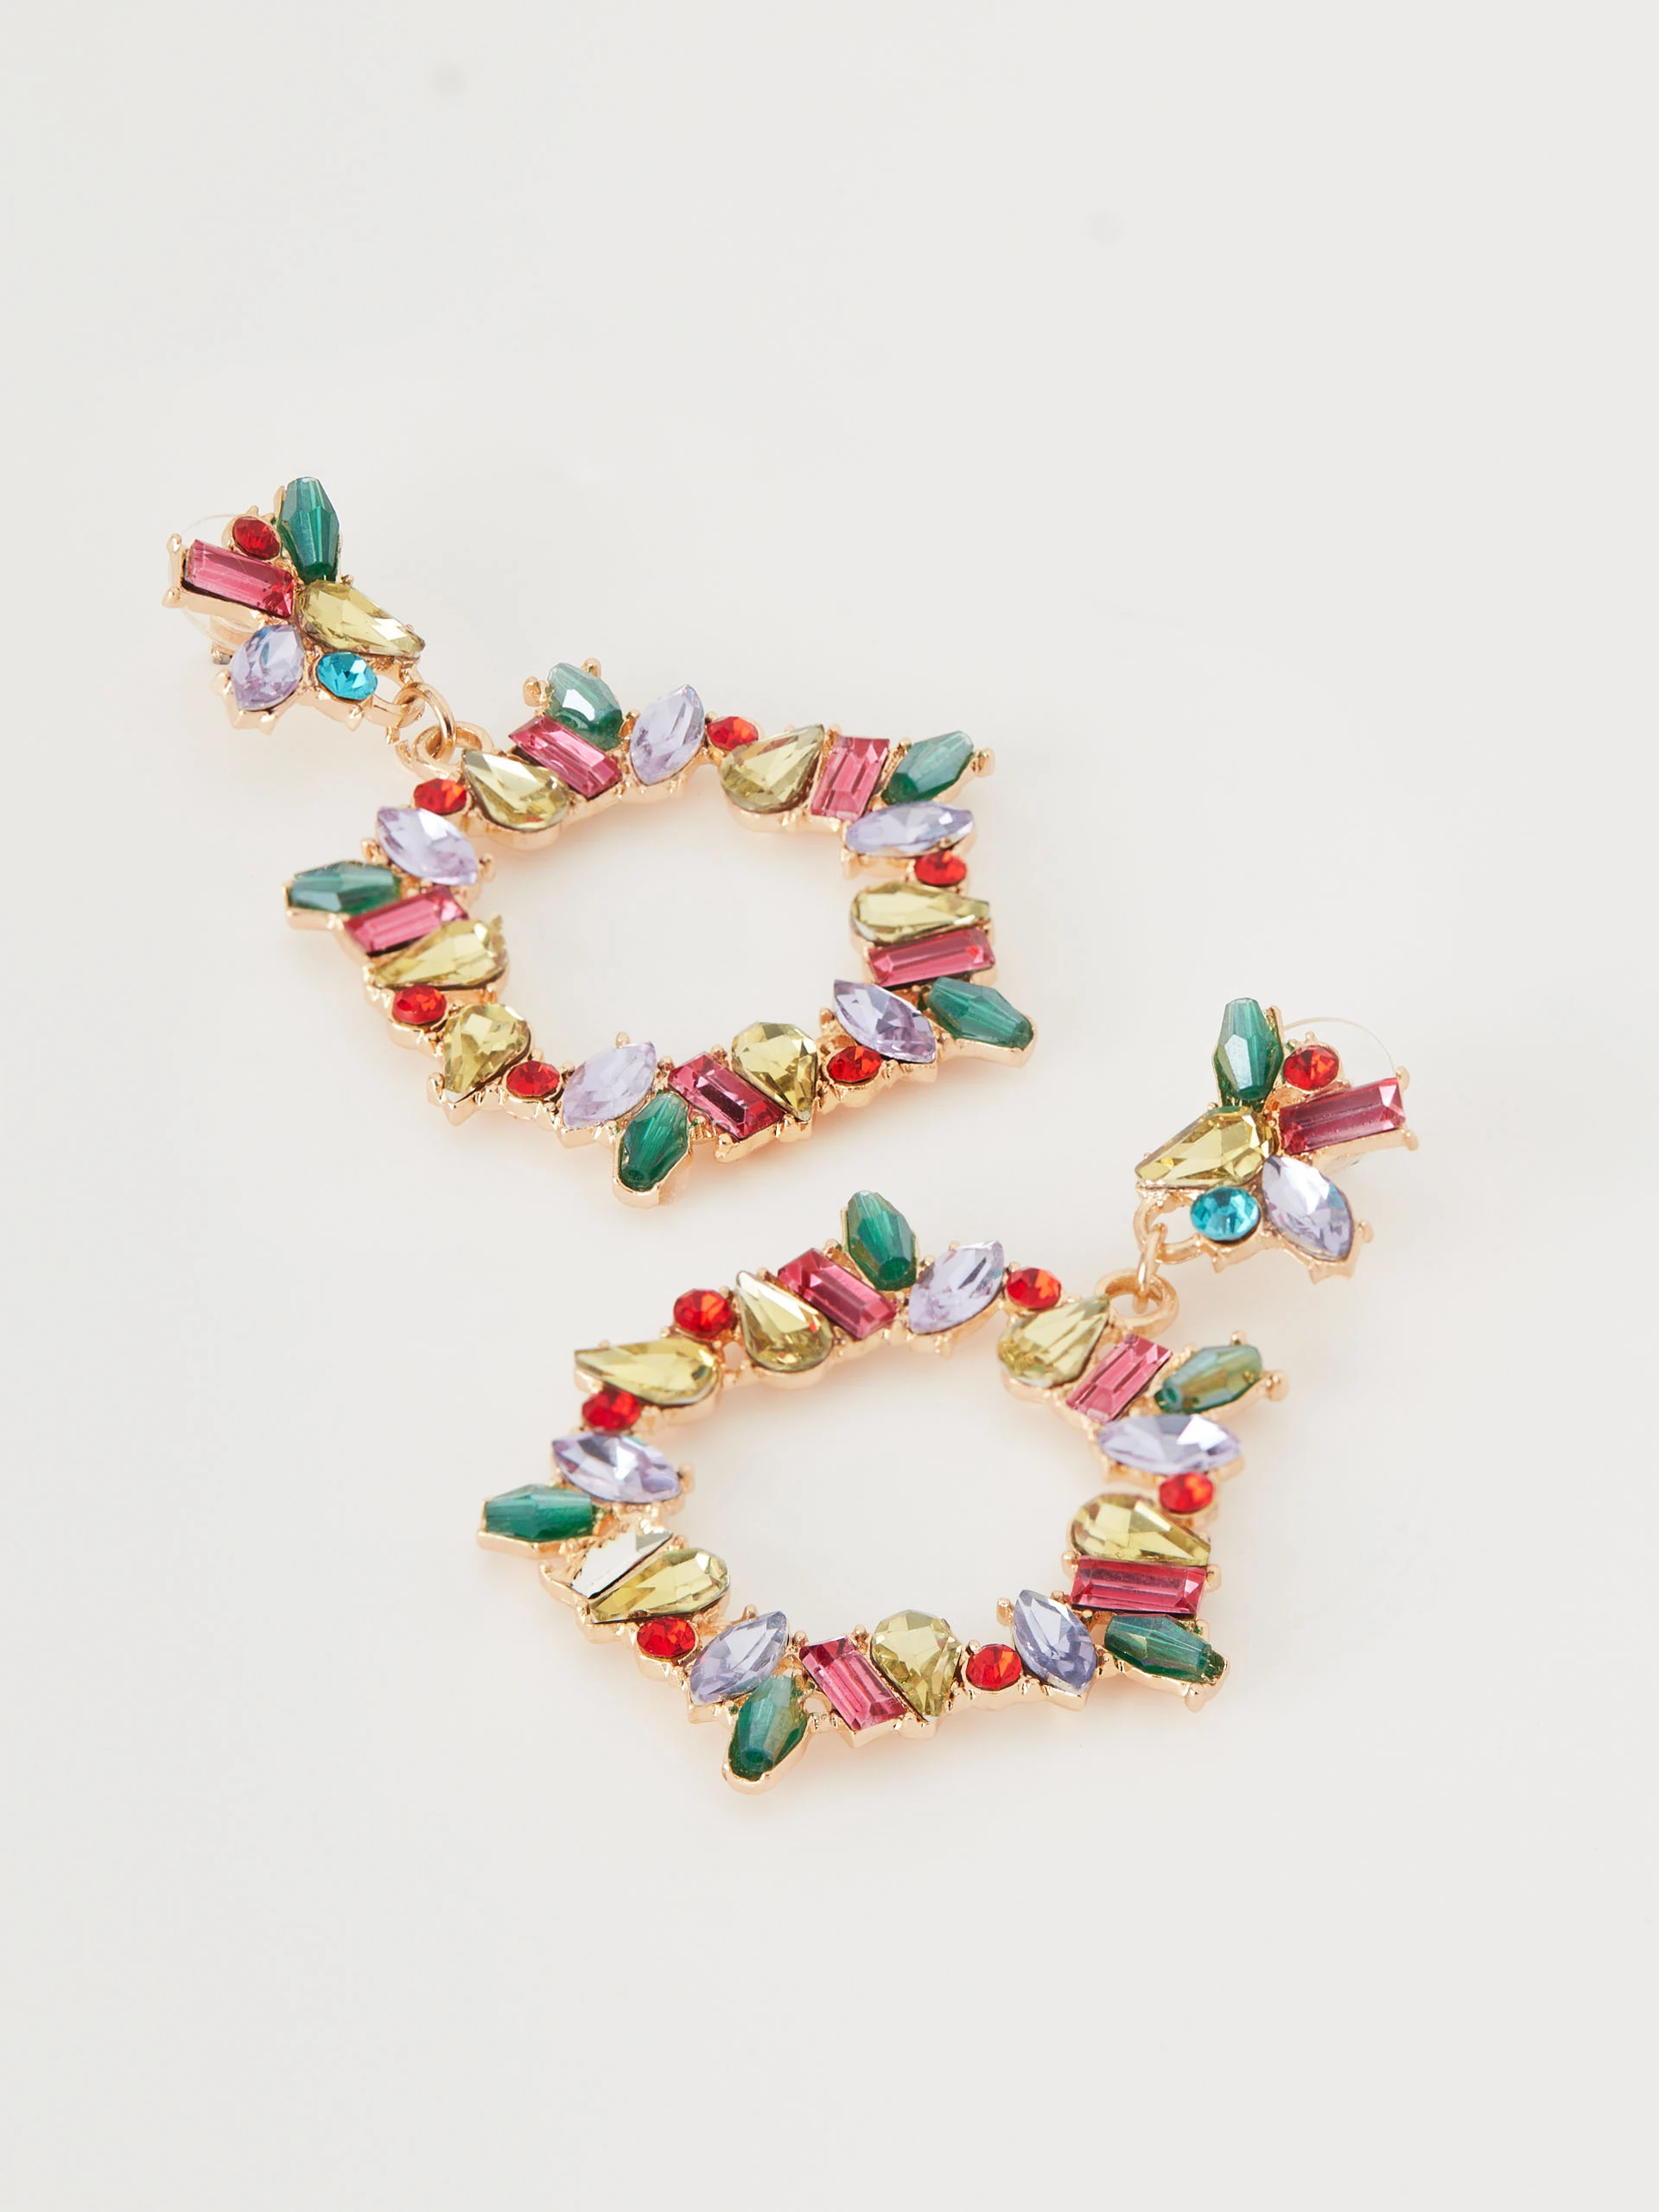 Colorful pendant earrings on sticks